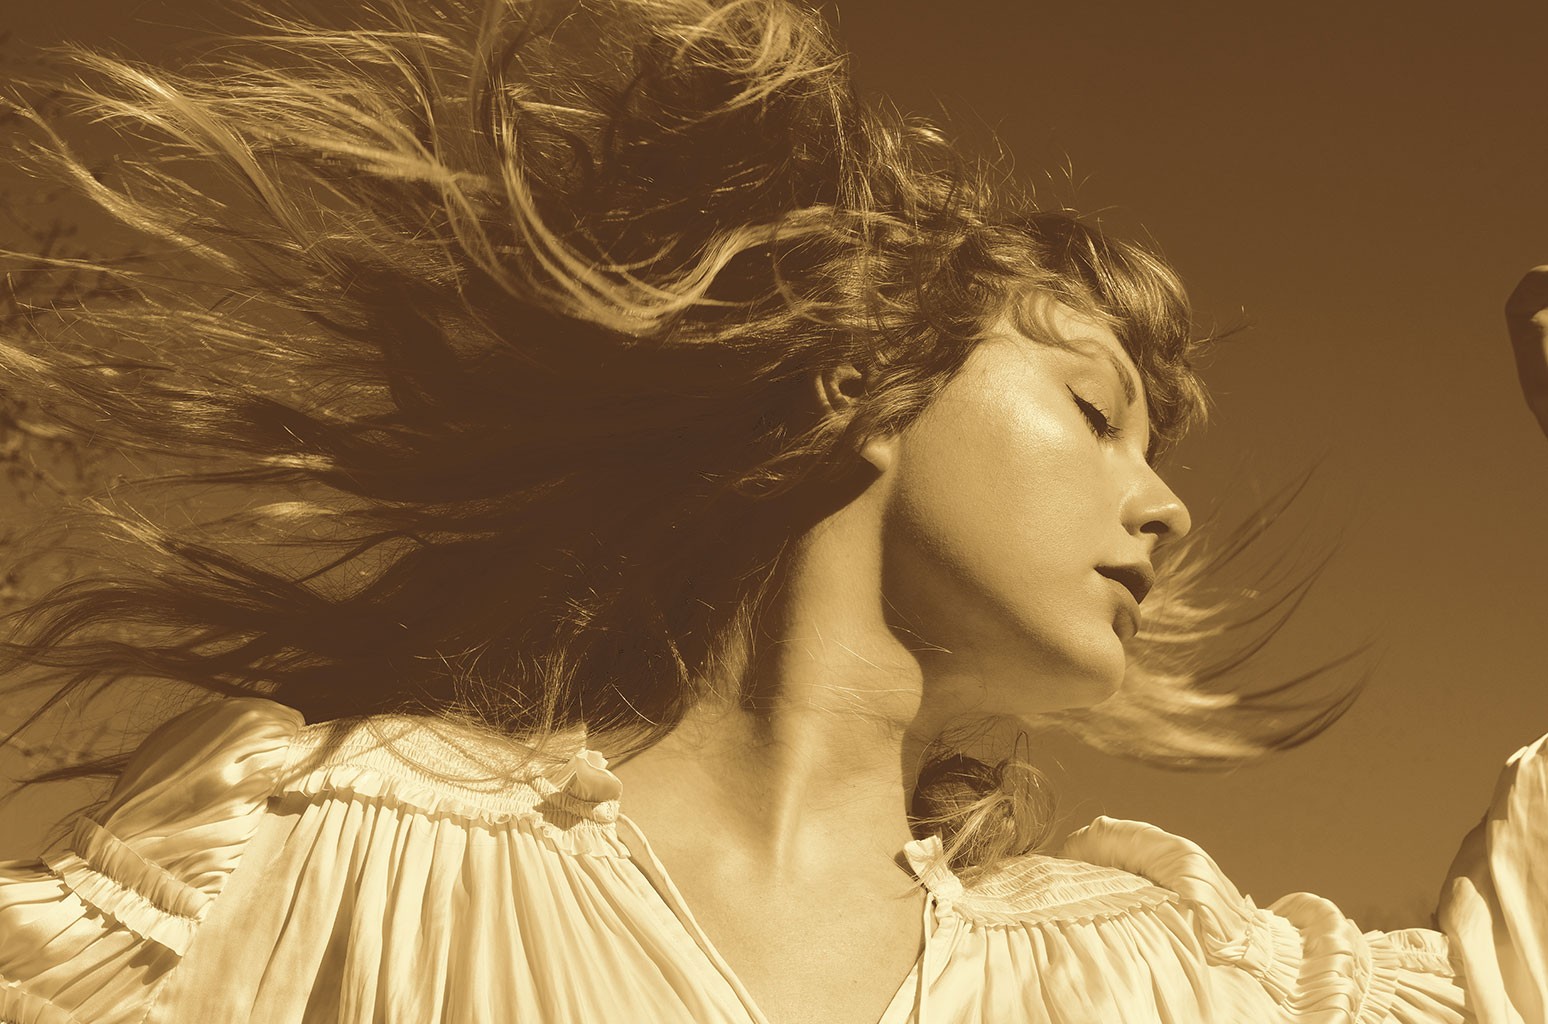 Taylor-Swift-fearless-album-art-cr-Beth-Garrabrant-billboard-1548-1617974680-compressed[1]